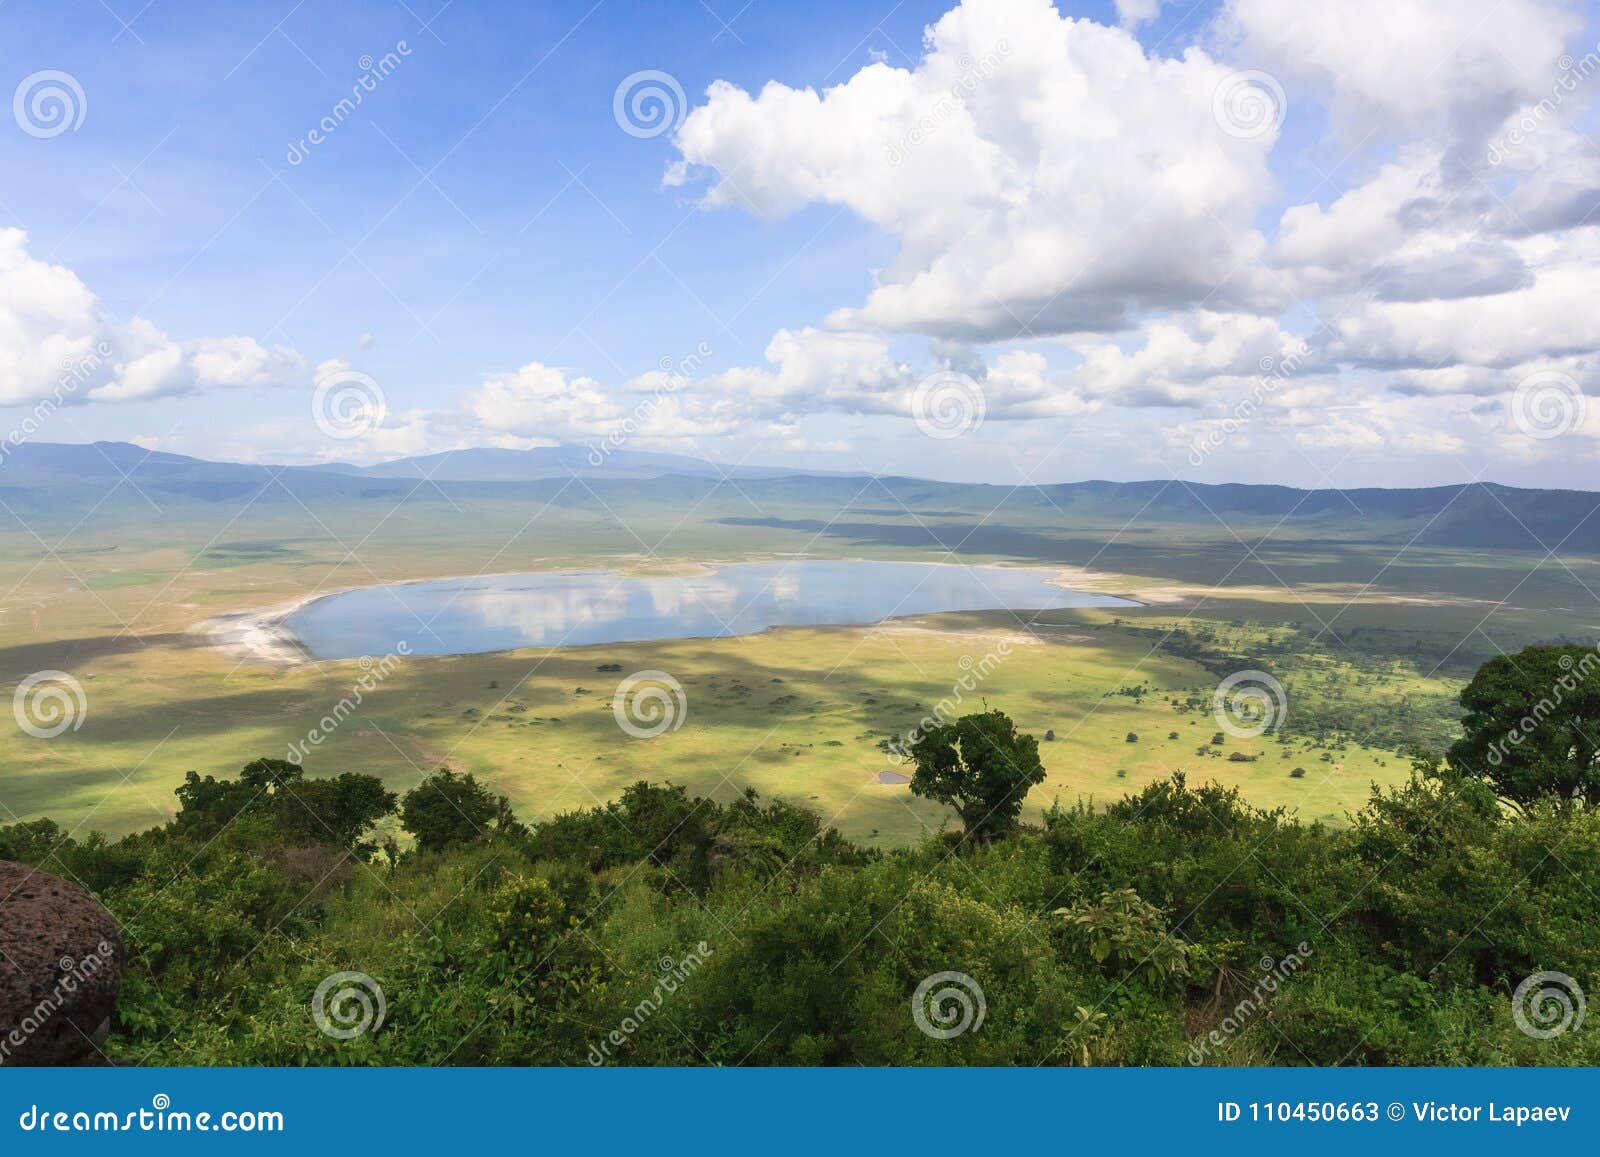 panorama of ngorongoro crater. tanzania, africa